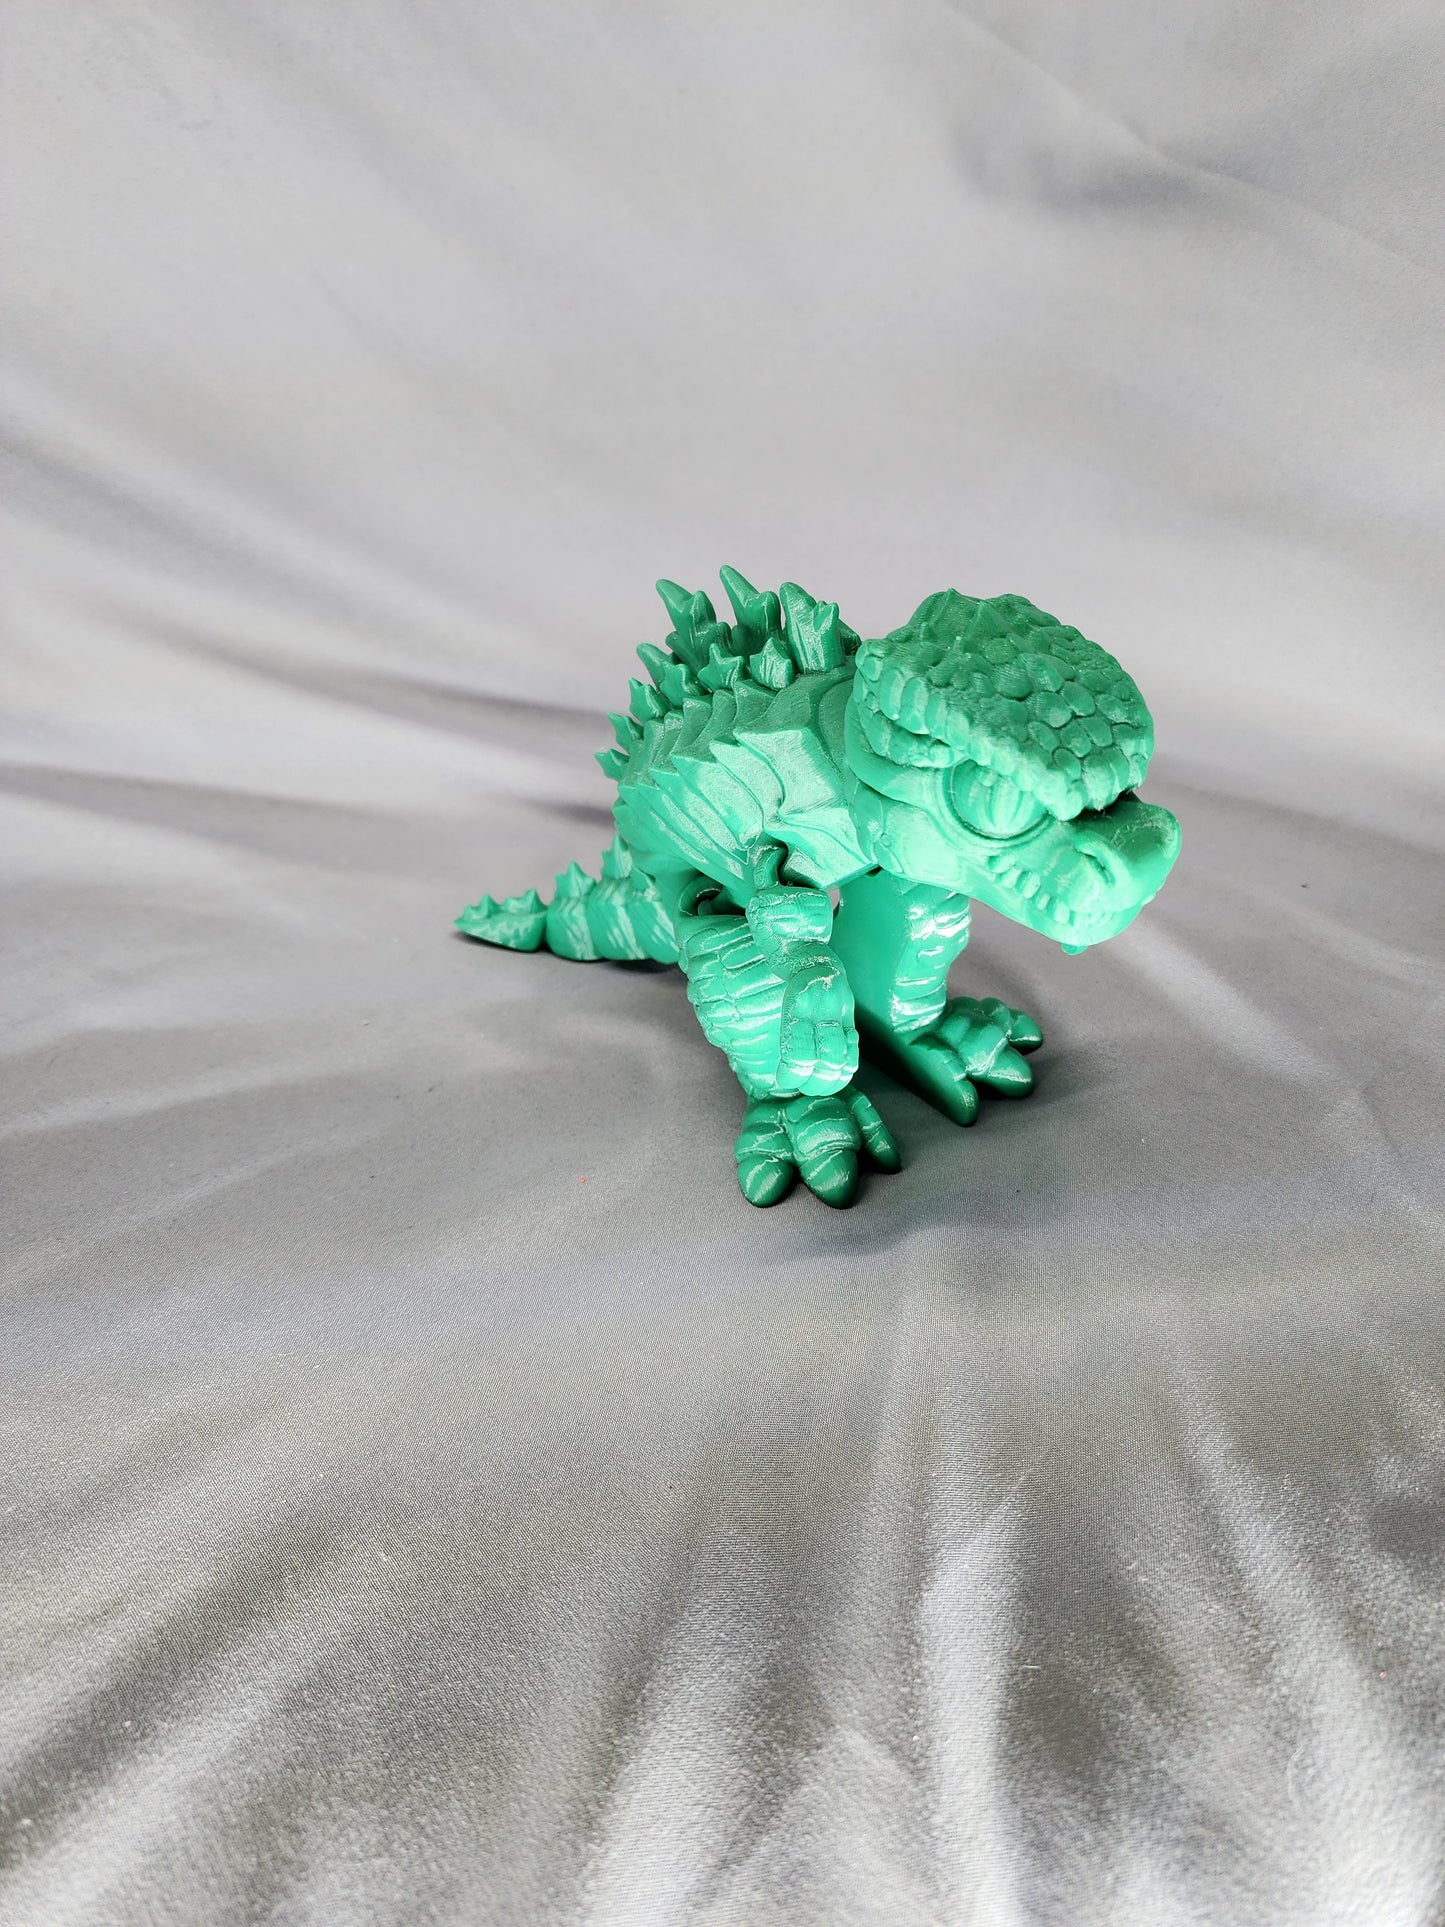 Godzilla articulating figurine